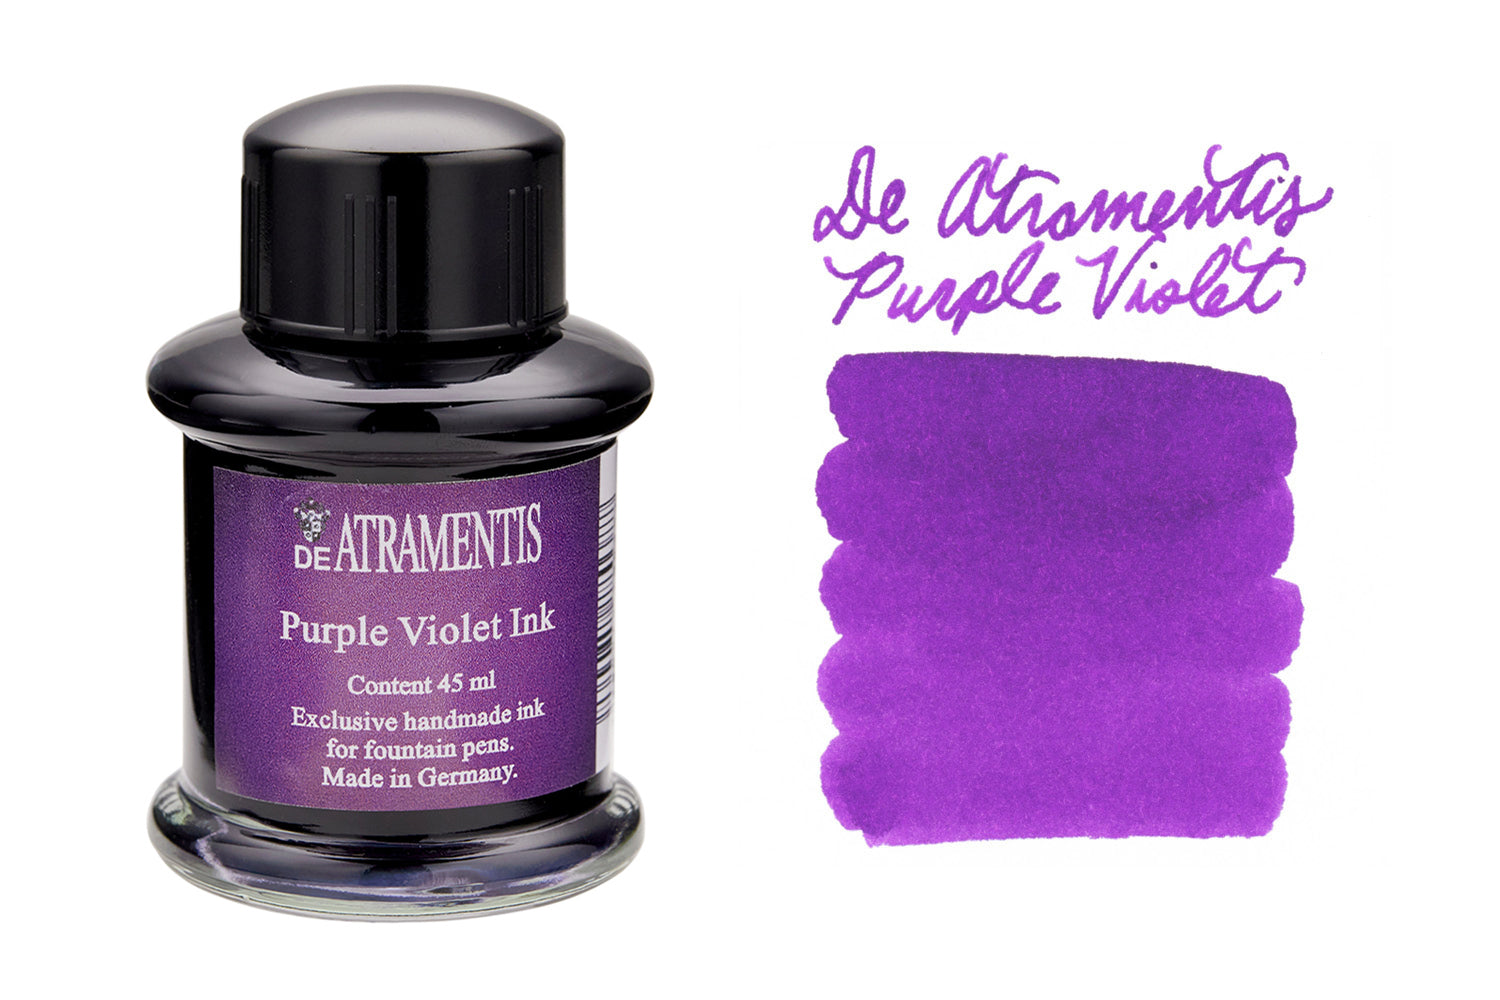 Noodler's Purple - 3oz Bottled Fountain Pen Ink - The Goulet Pen Company